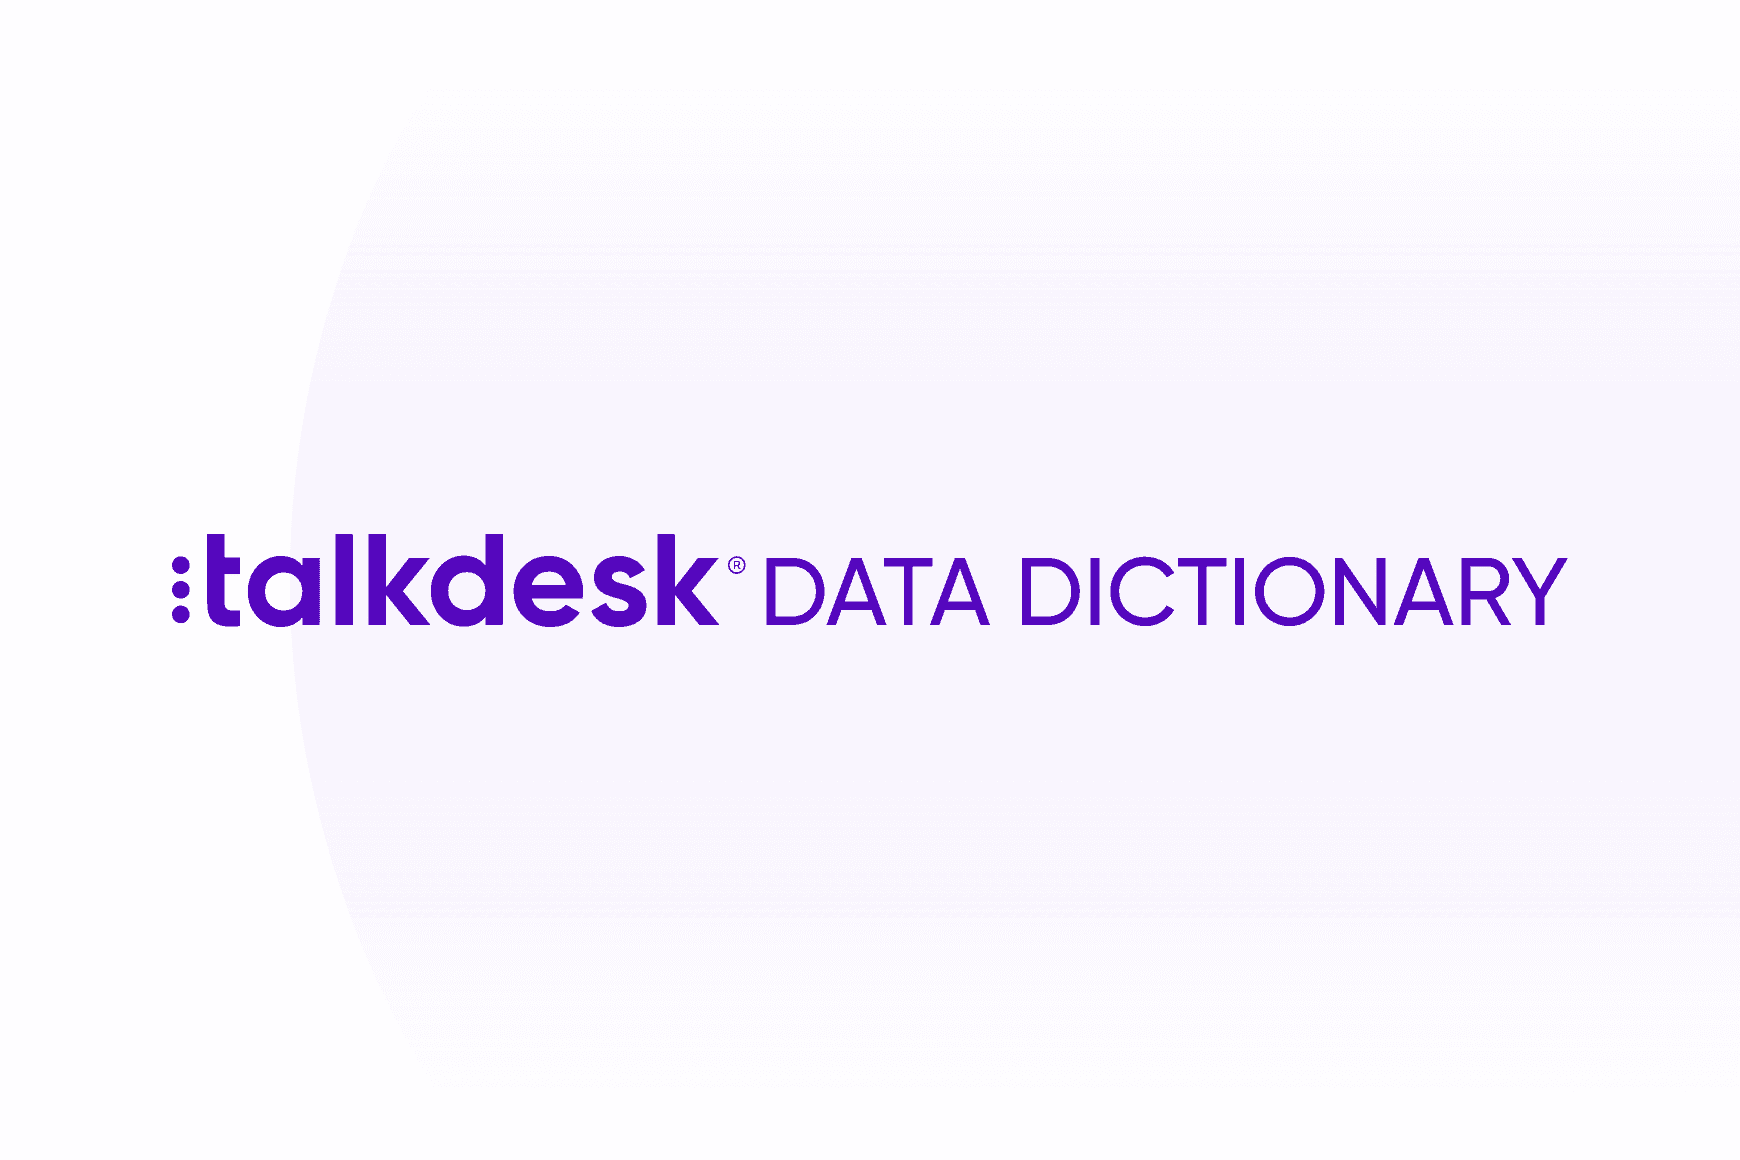 Talkdesk Data Dictionary Documentation